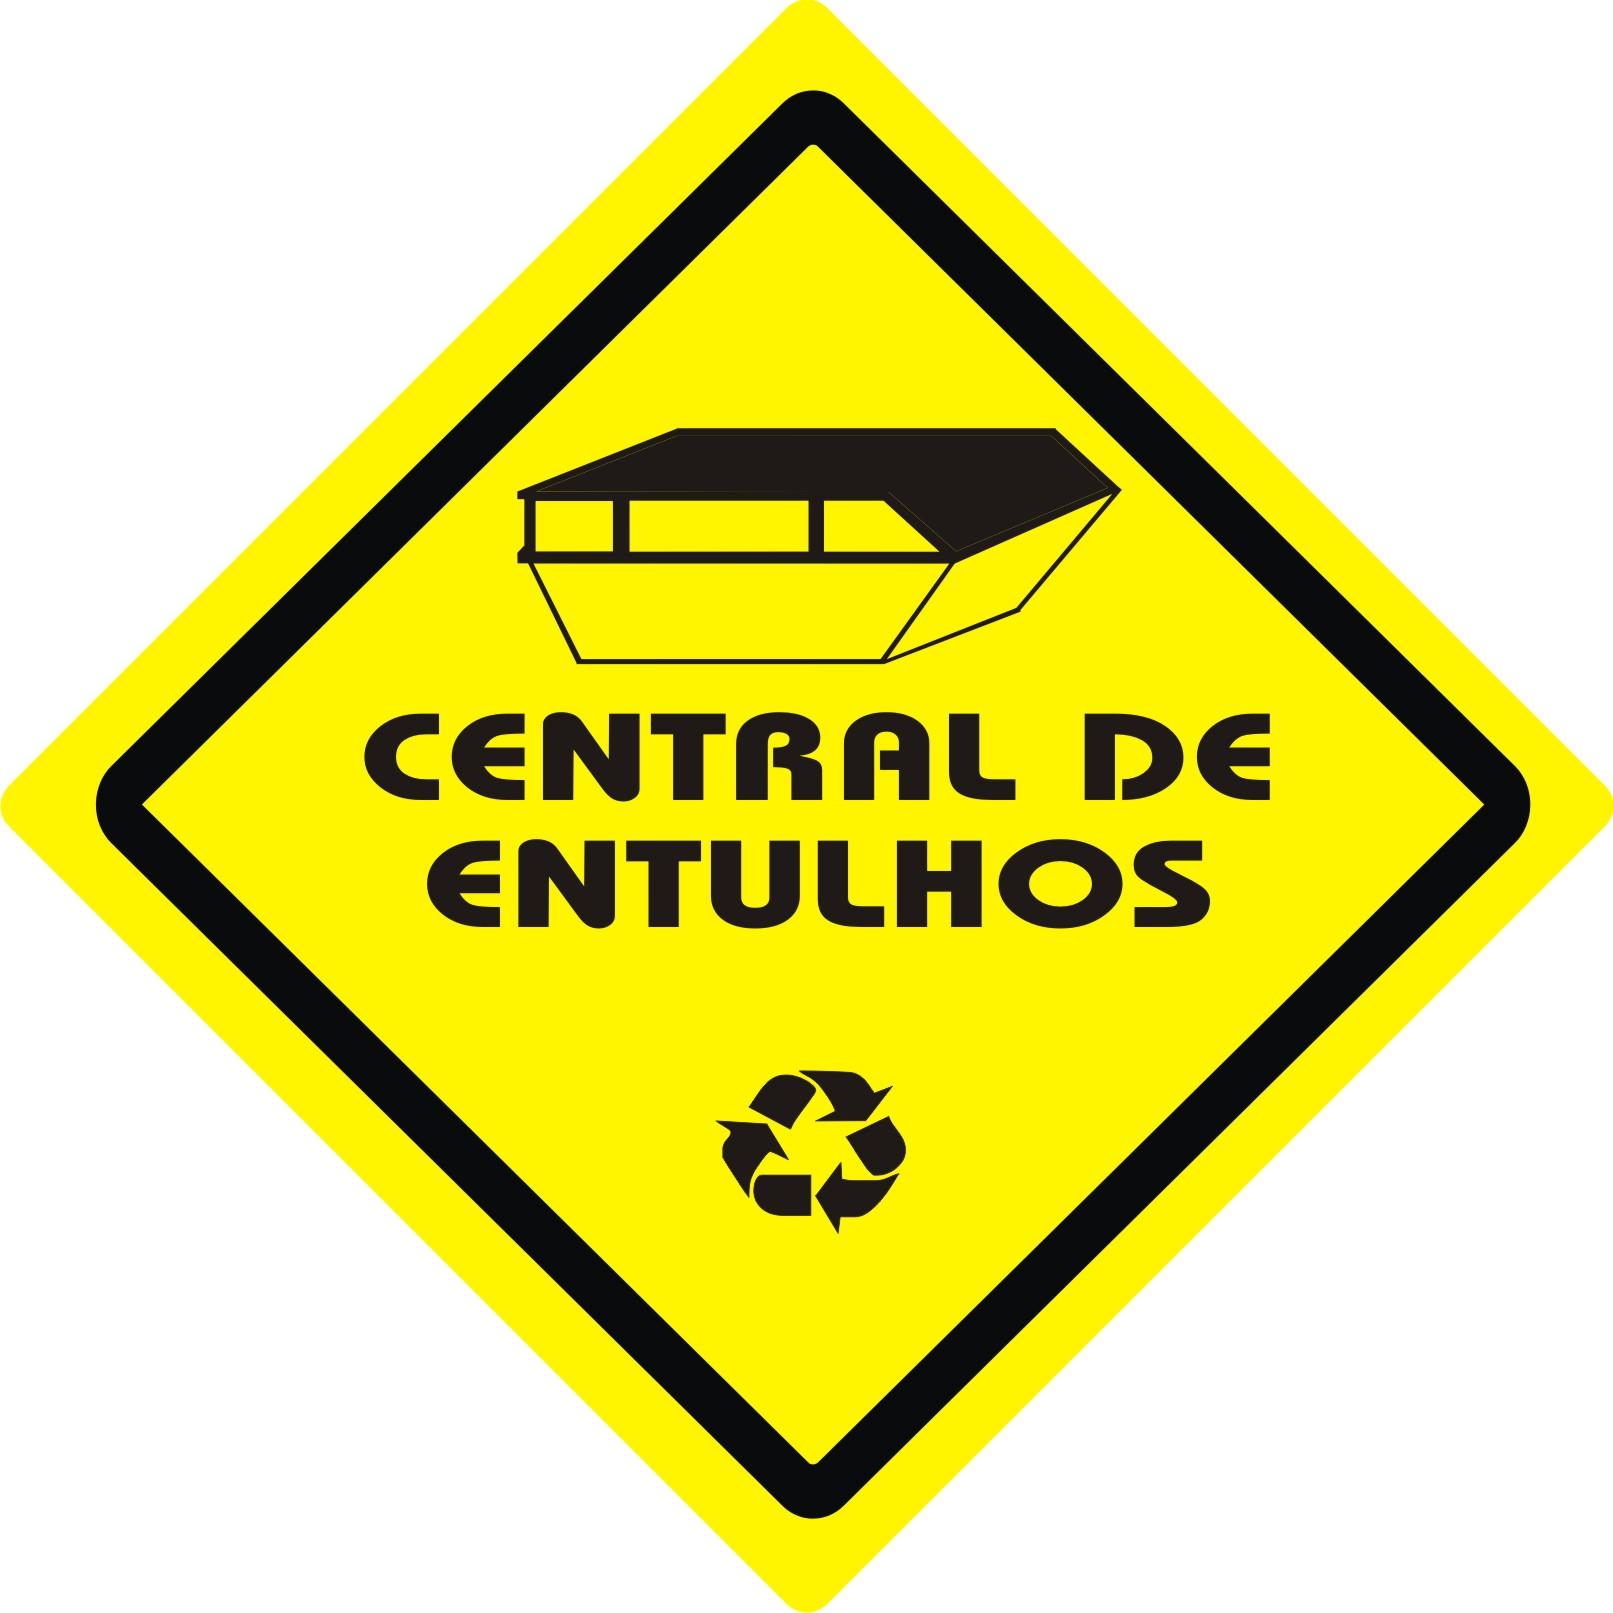 Central de Entulhos logo